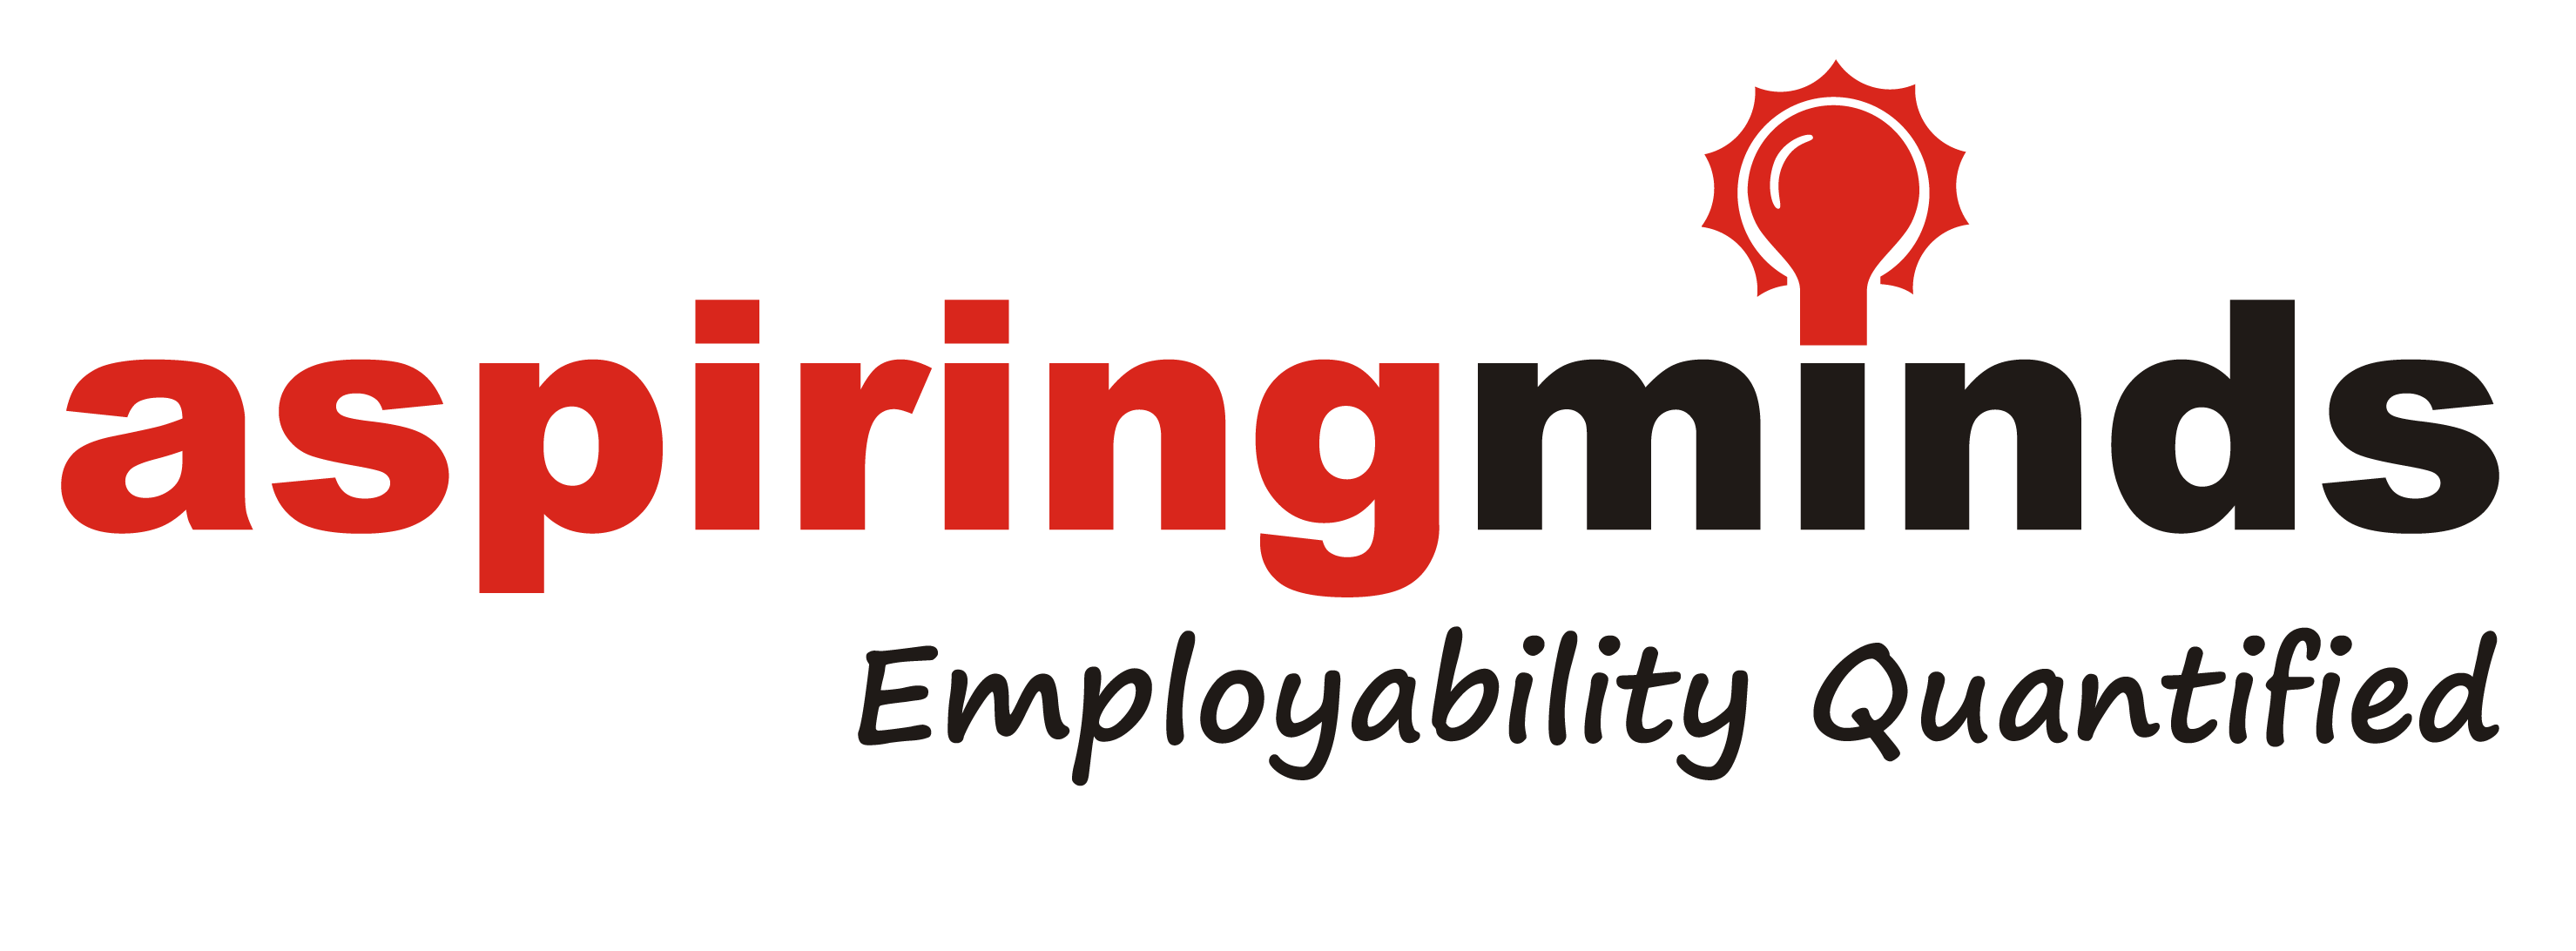 Aspiring Minds Launches First Standardized Employability Test In US To Bridge Employer Job